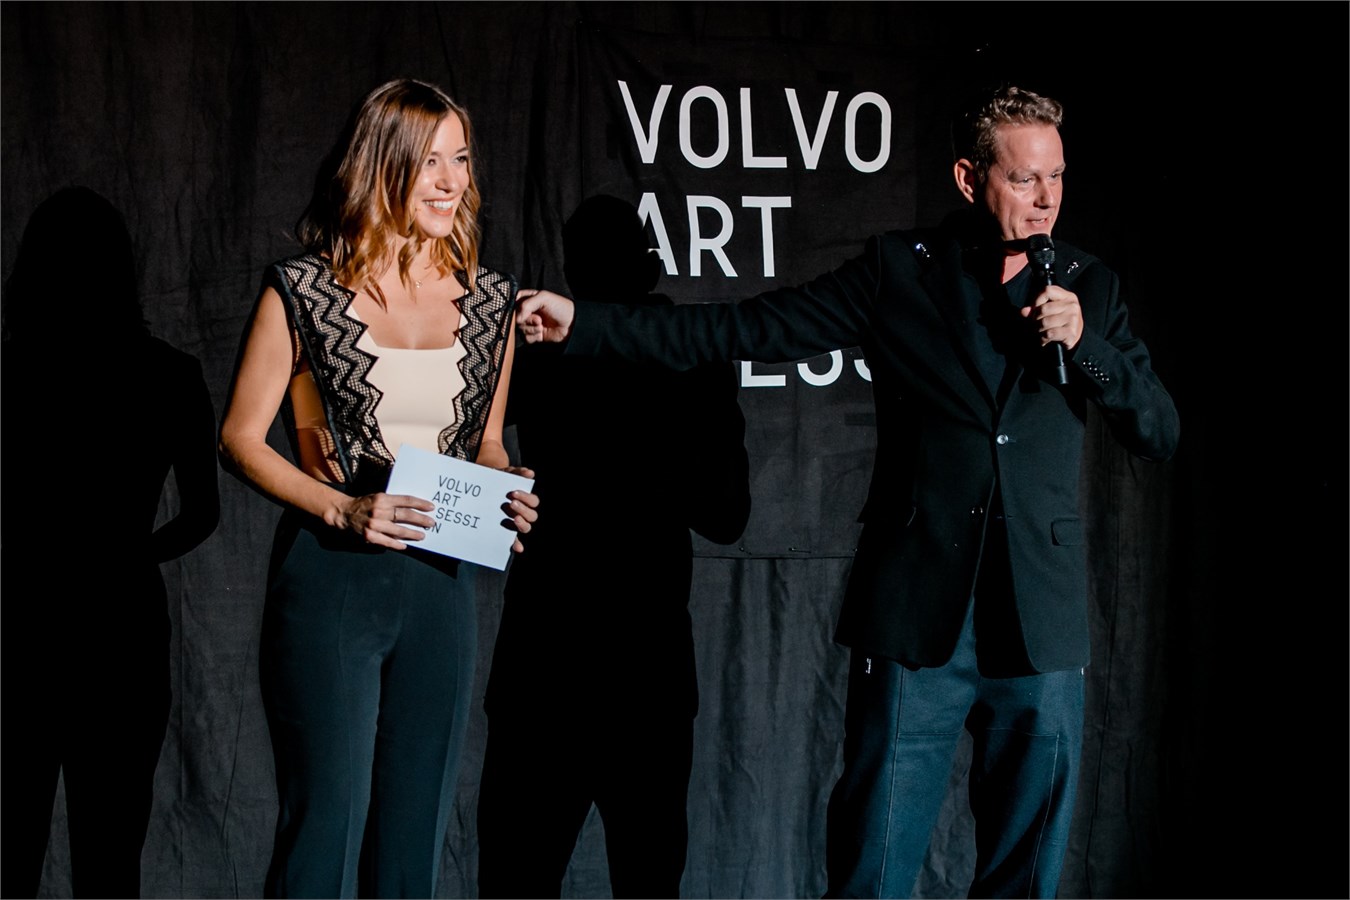 Volvo Art Session – Human meets Digital